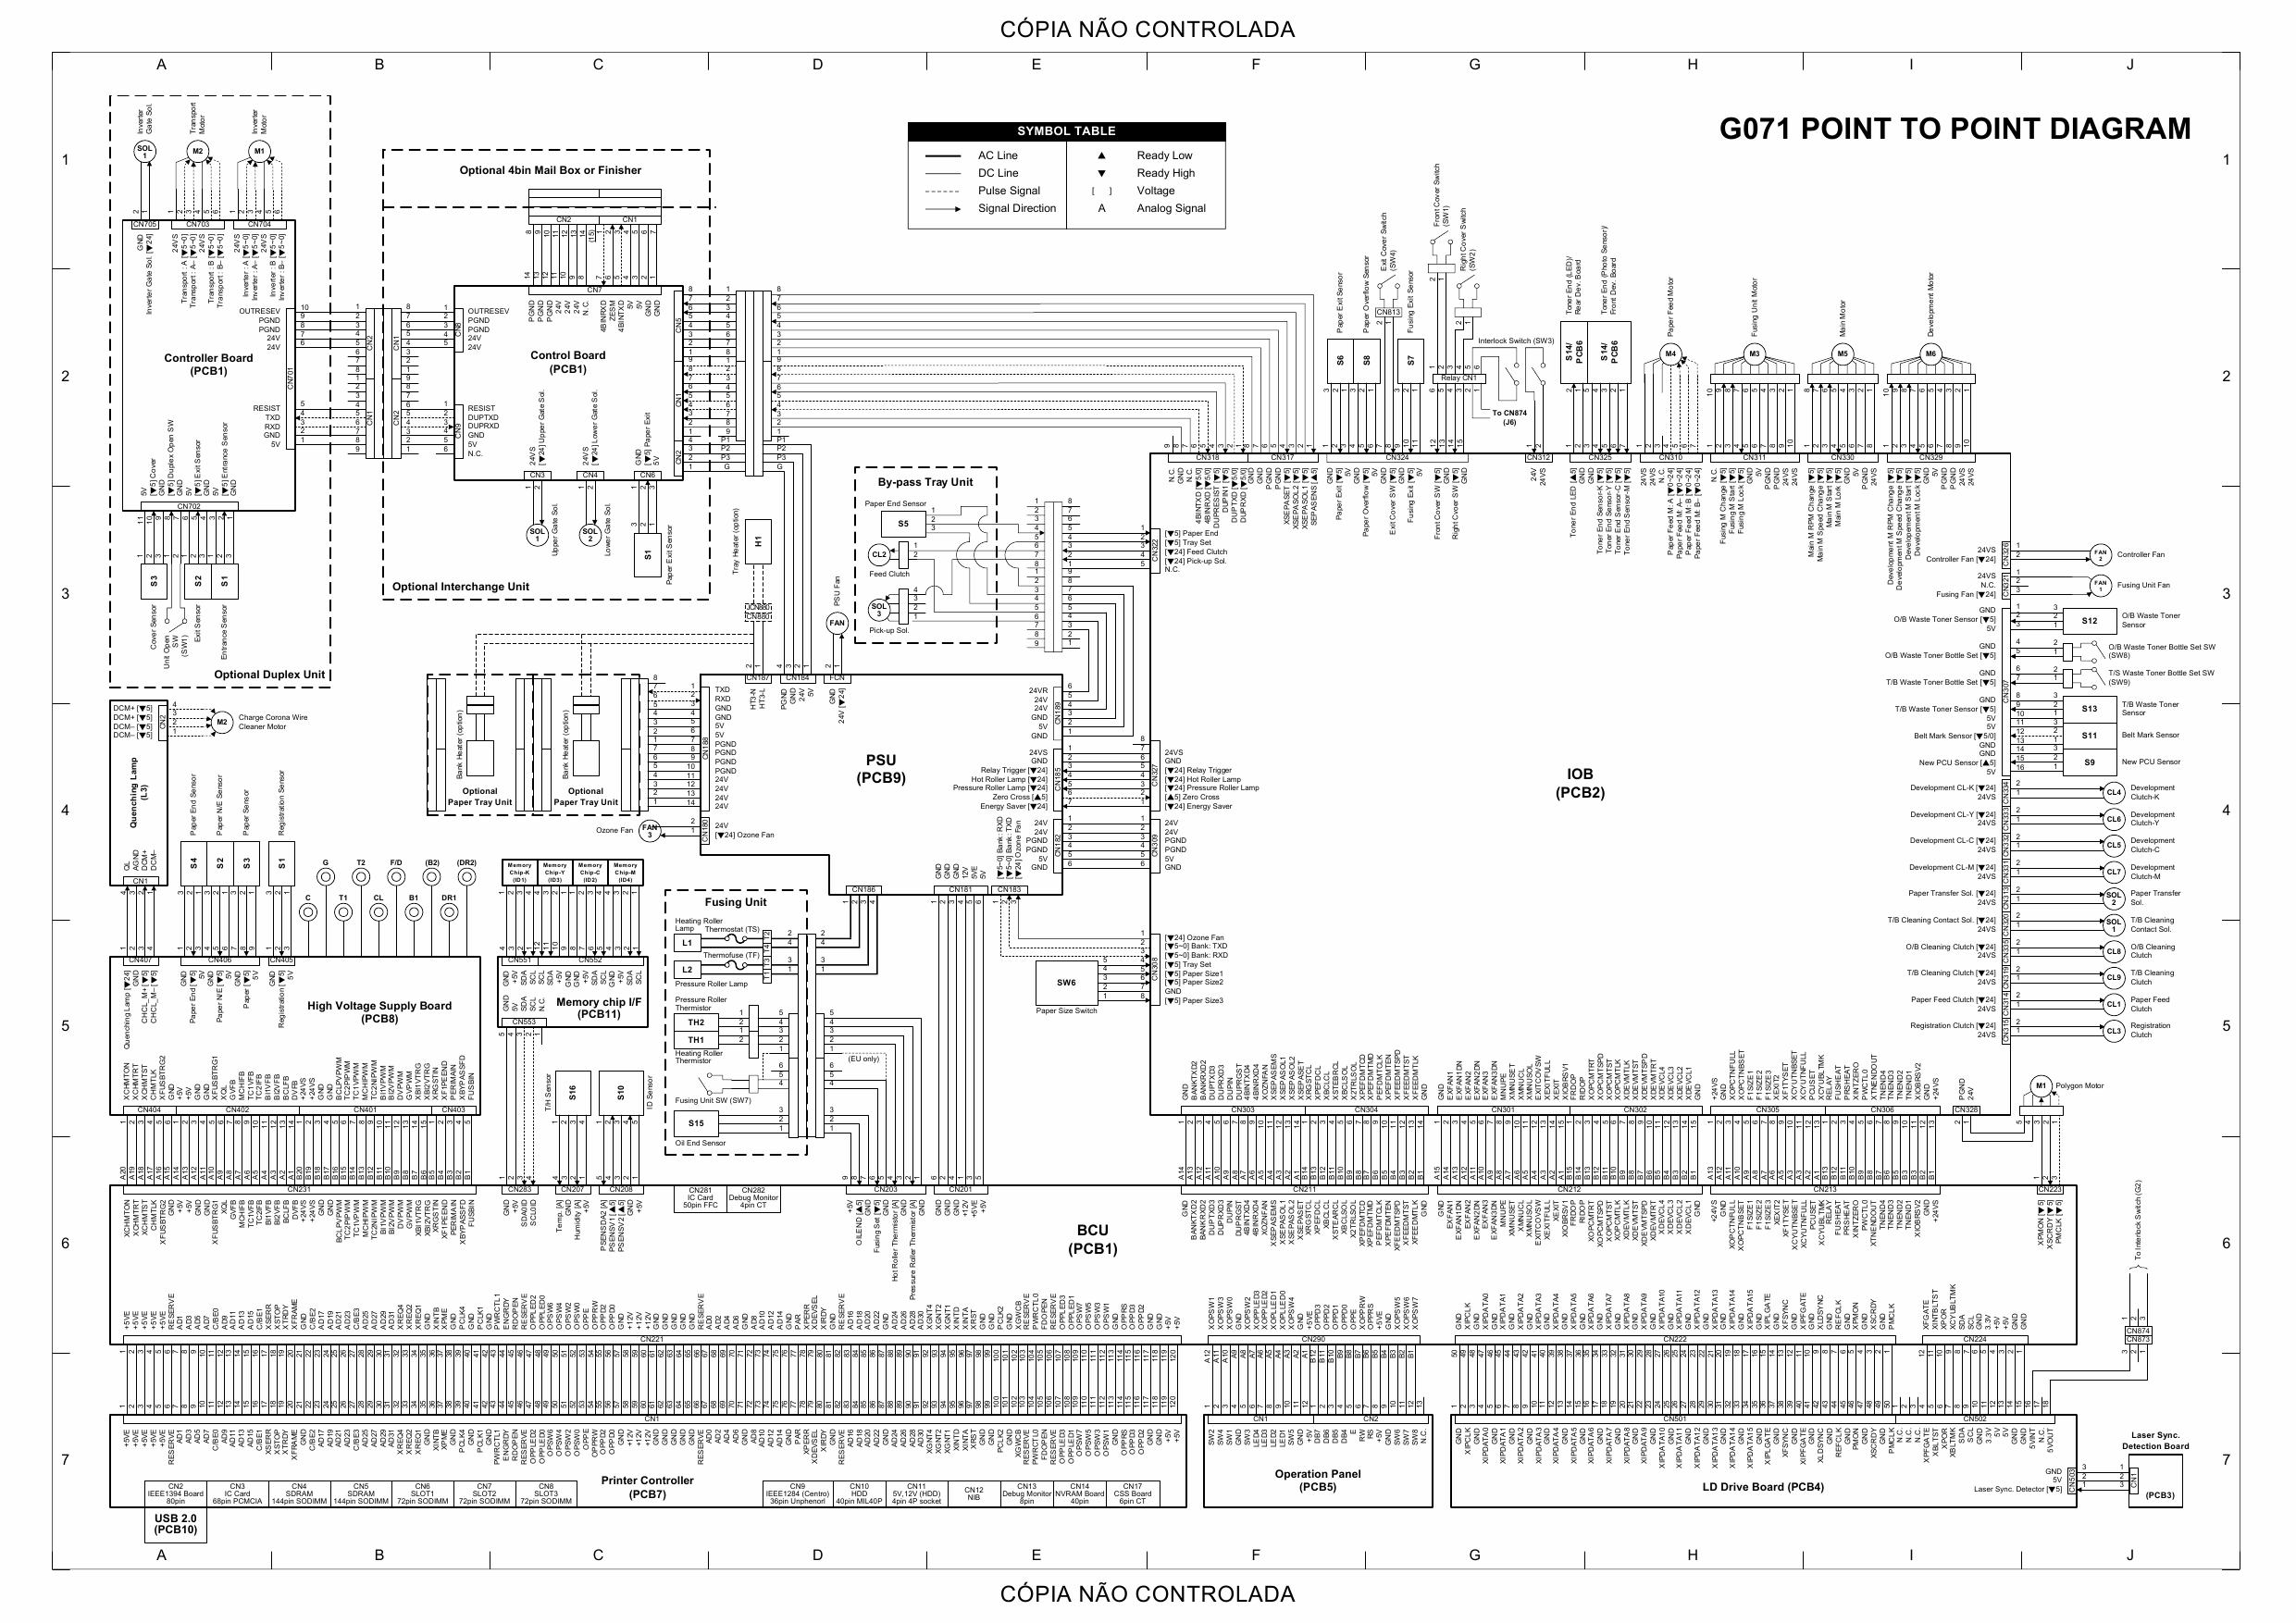 RICOH Aficio CL-5000 G071 Circuit Diagram-1